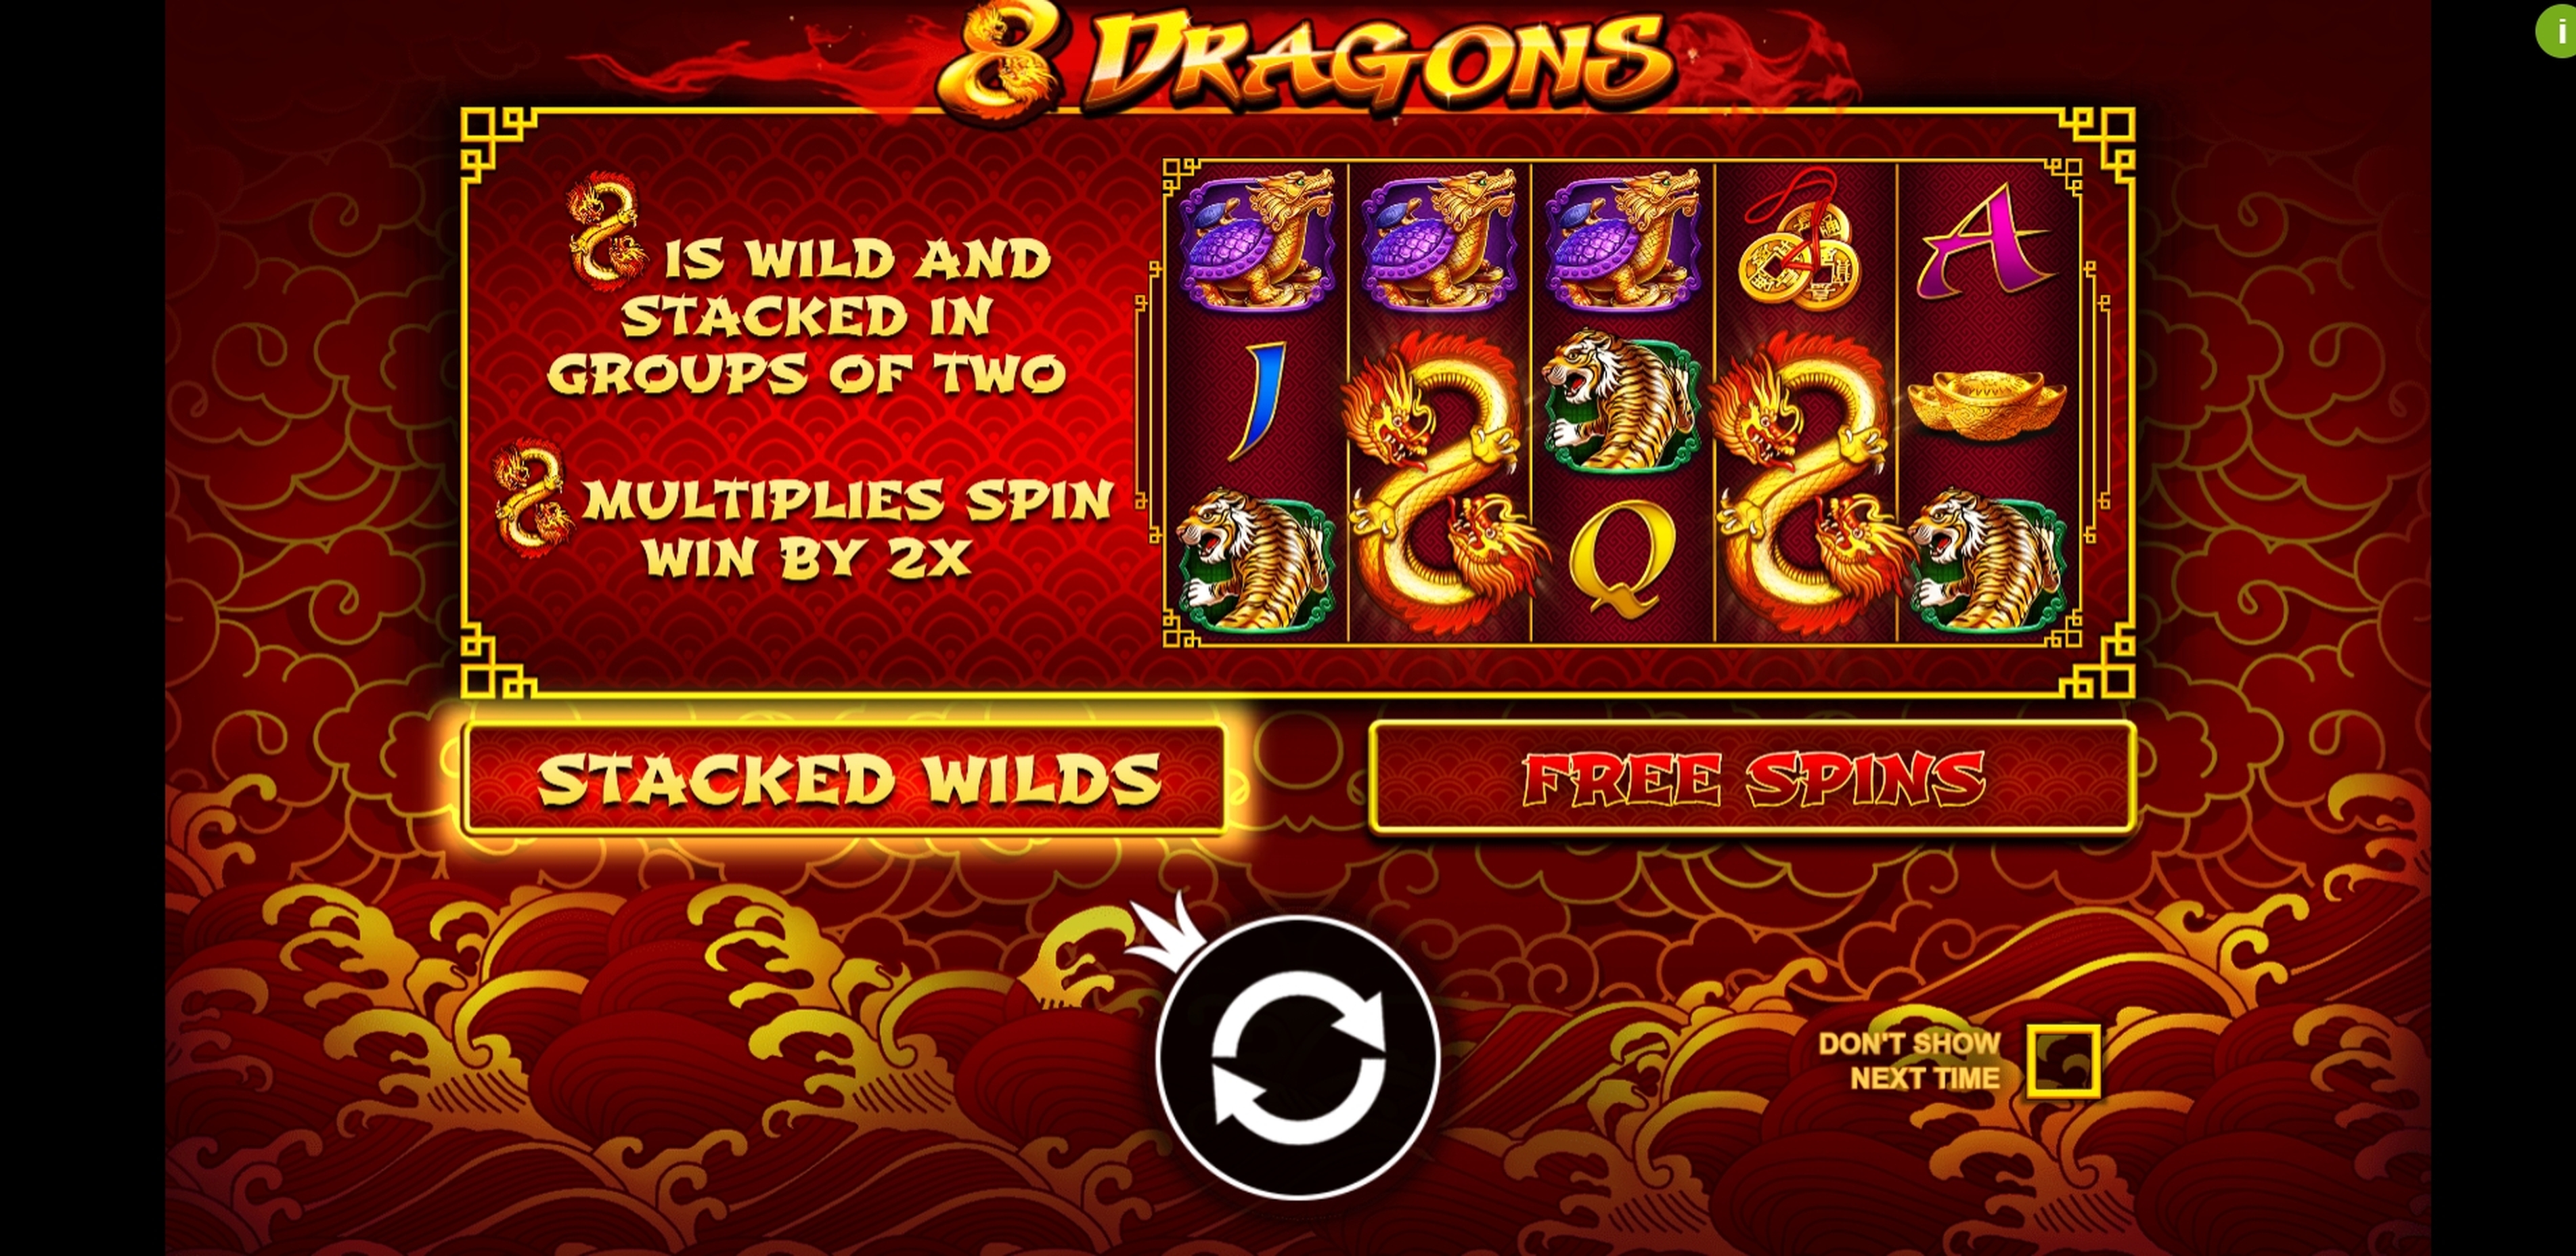 Play 8 Dragons Free Casino Slot Game by Pragmatic Play